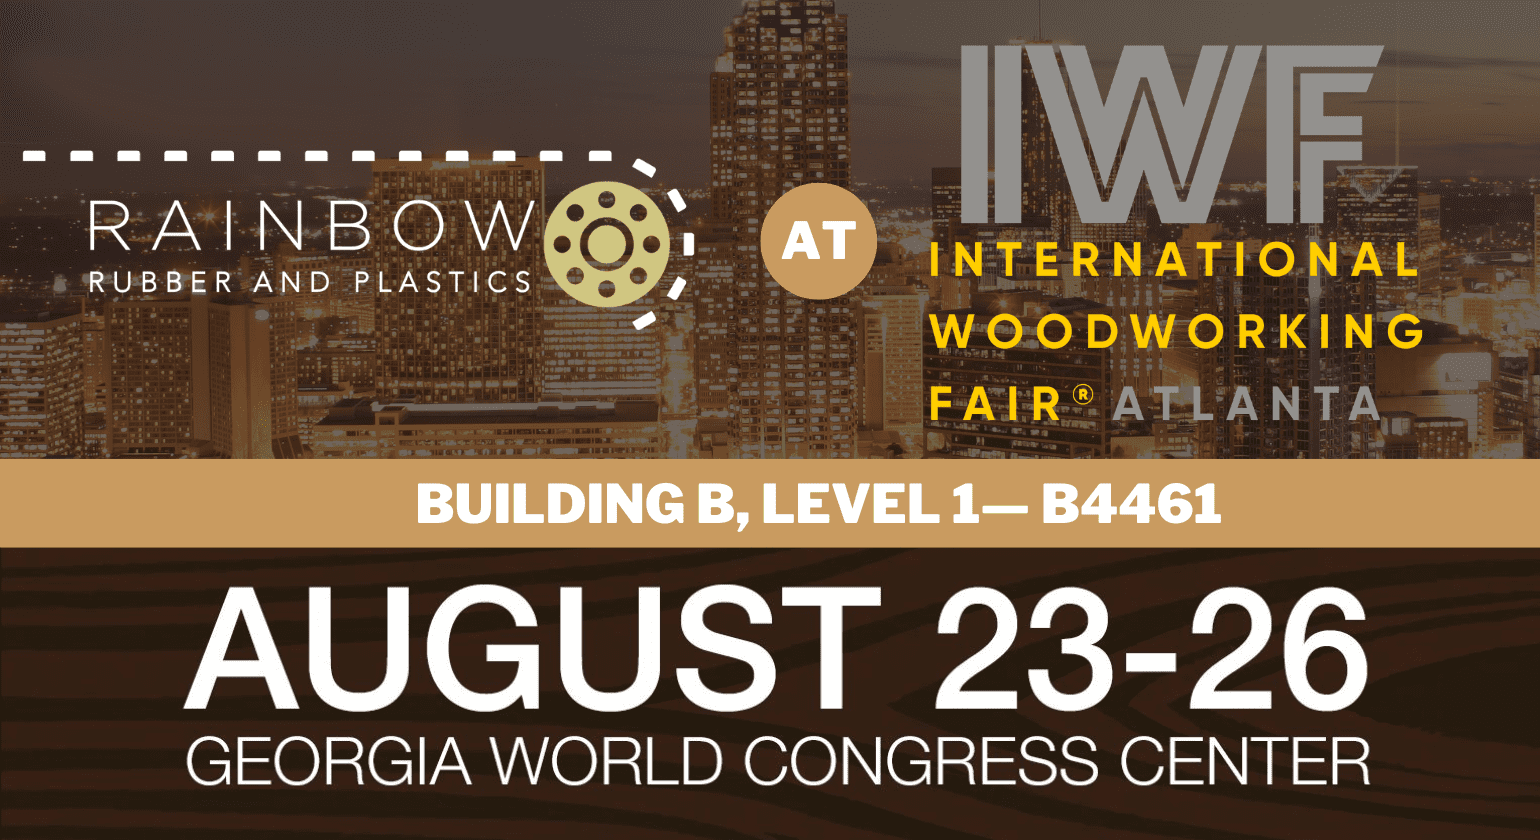 Meet Rainbow Rubber & Plastics at the Atlanta International Woodworking Fair on August 23-26